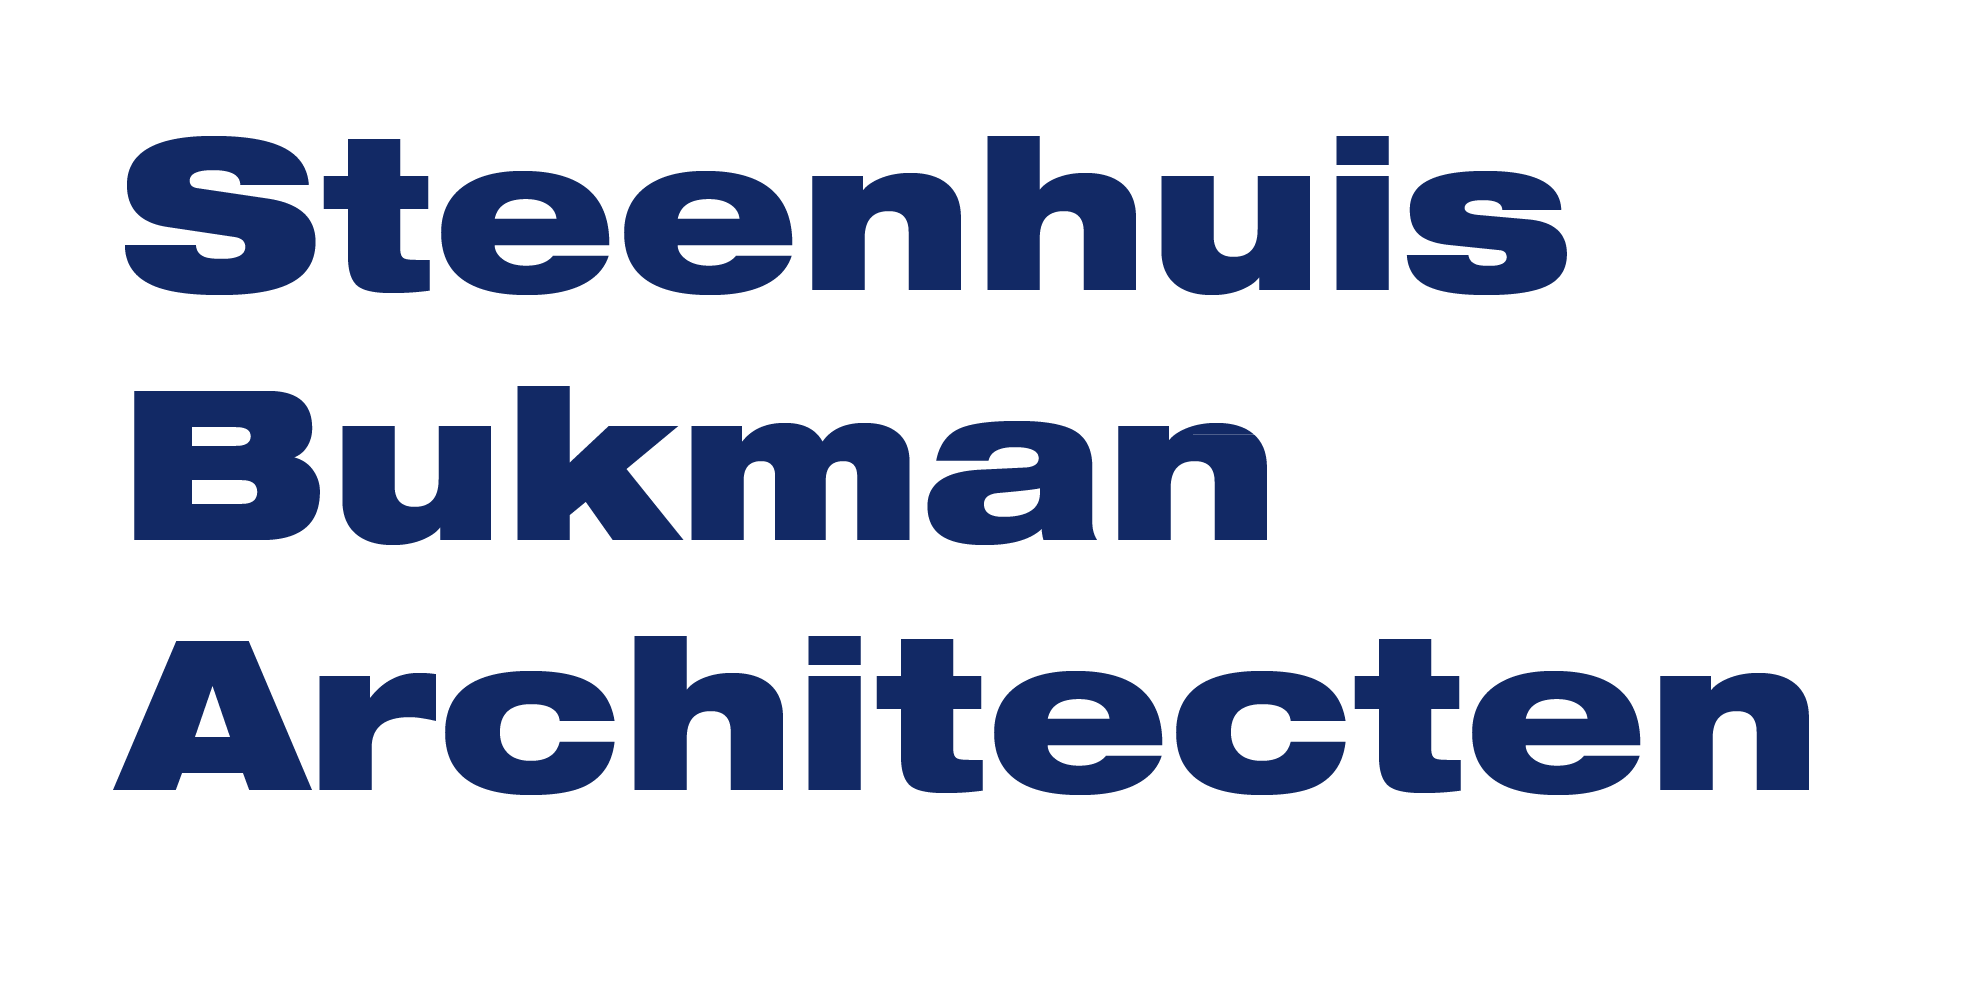 Steenhuis Bukman Architecten